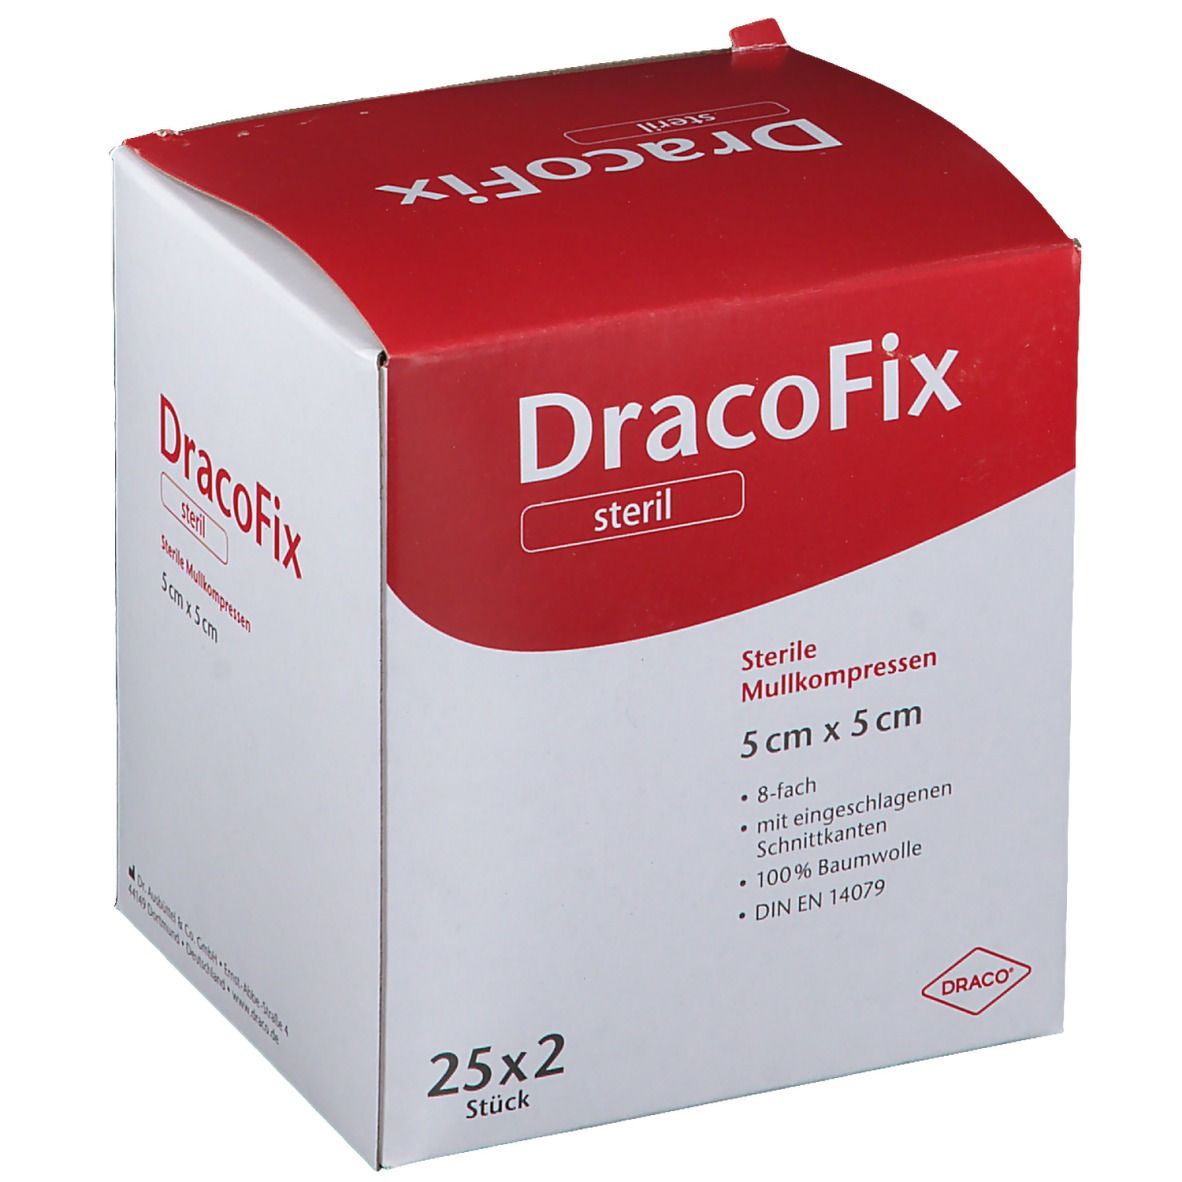 DracoFix Mullkompressen 5 x 5 cm, steril